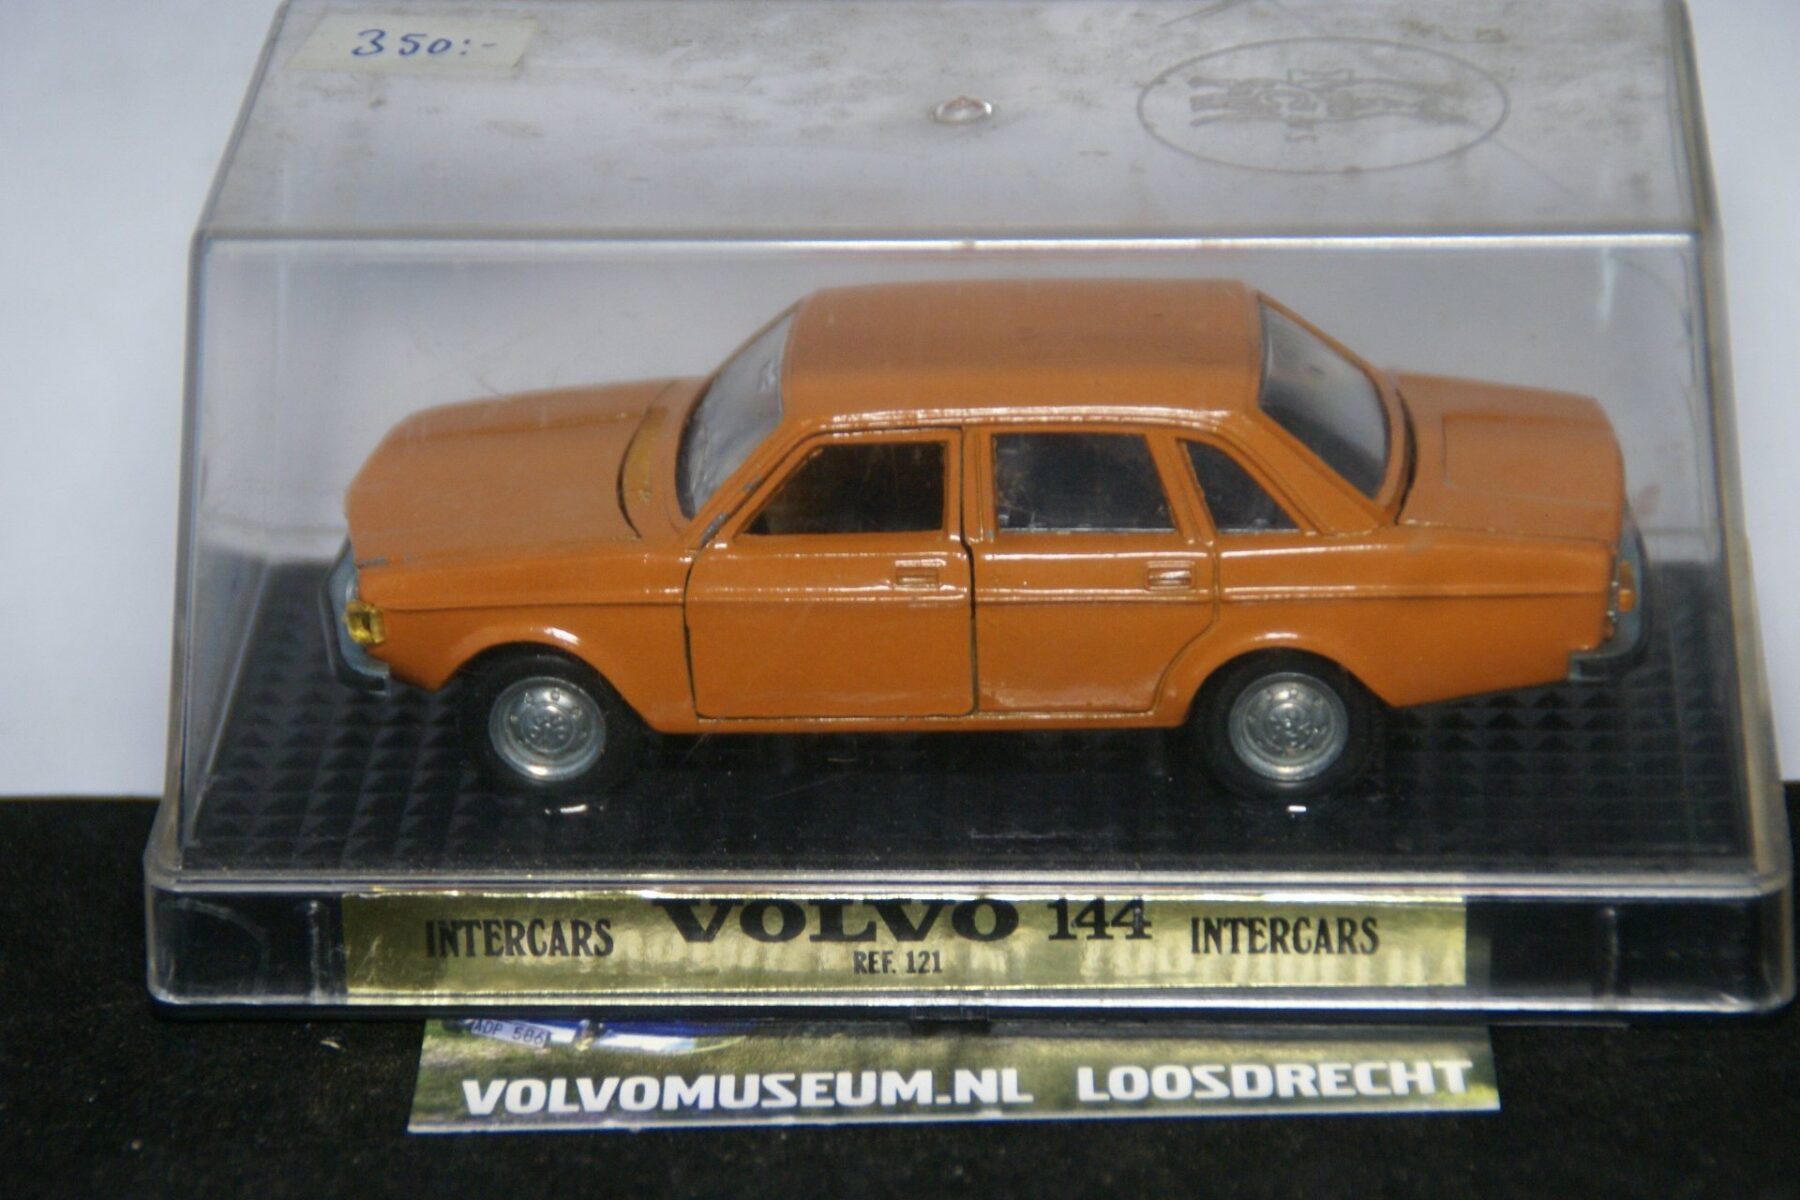 DSC03133 miniatuur Volvo 144 oranje 1op43  Nacoral Intercars 121 MB